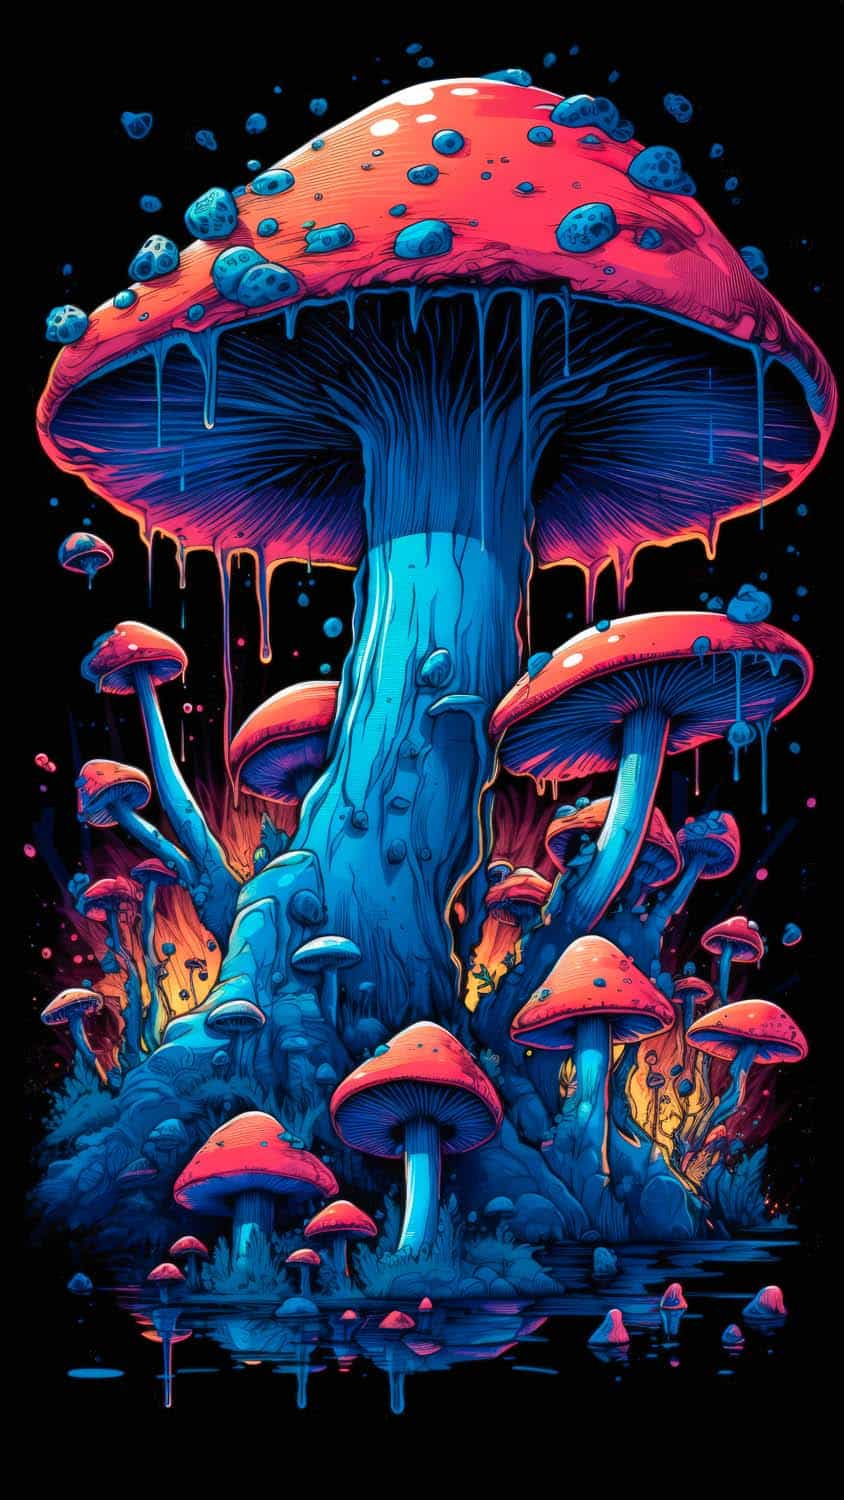 Psy Mushrooms wallpaper by CheshArt  Download on ZEDGE  4962  Trippy  iphone wallpaper Mushroom wallpaper Trippy wallpaper